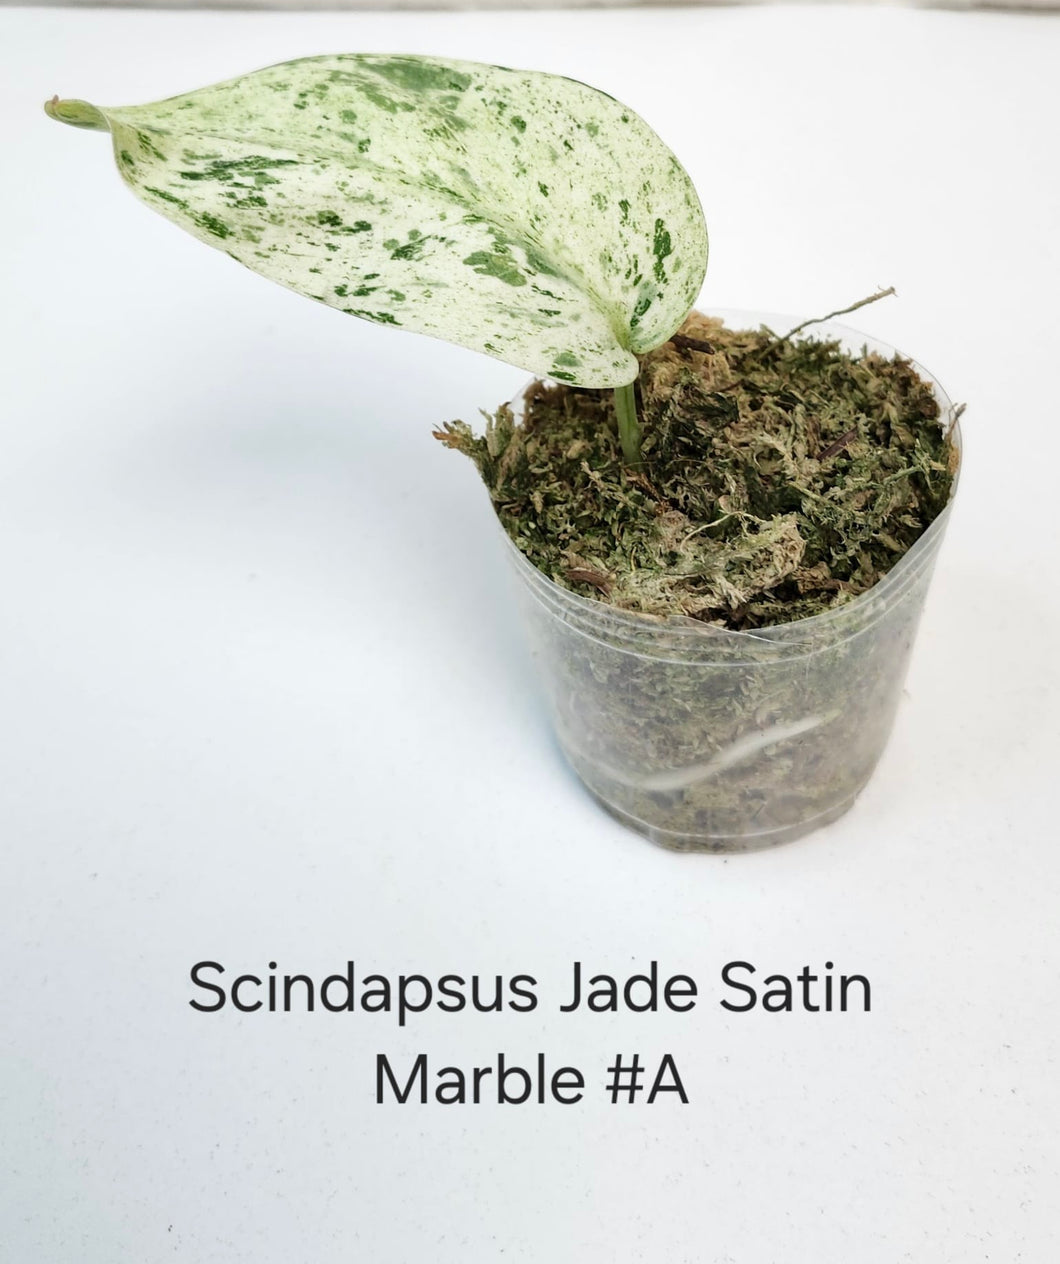 Scindapsus jade satin marble #A